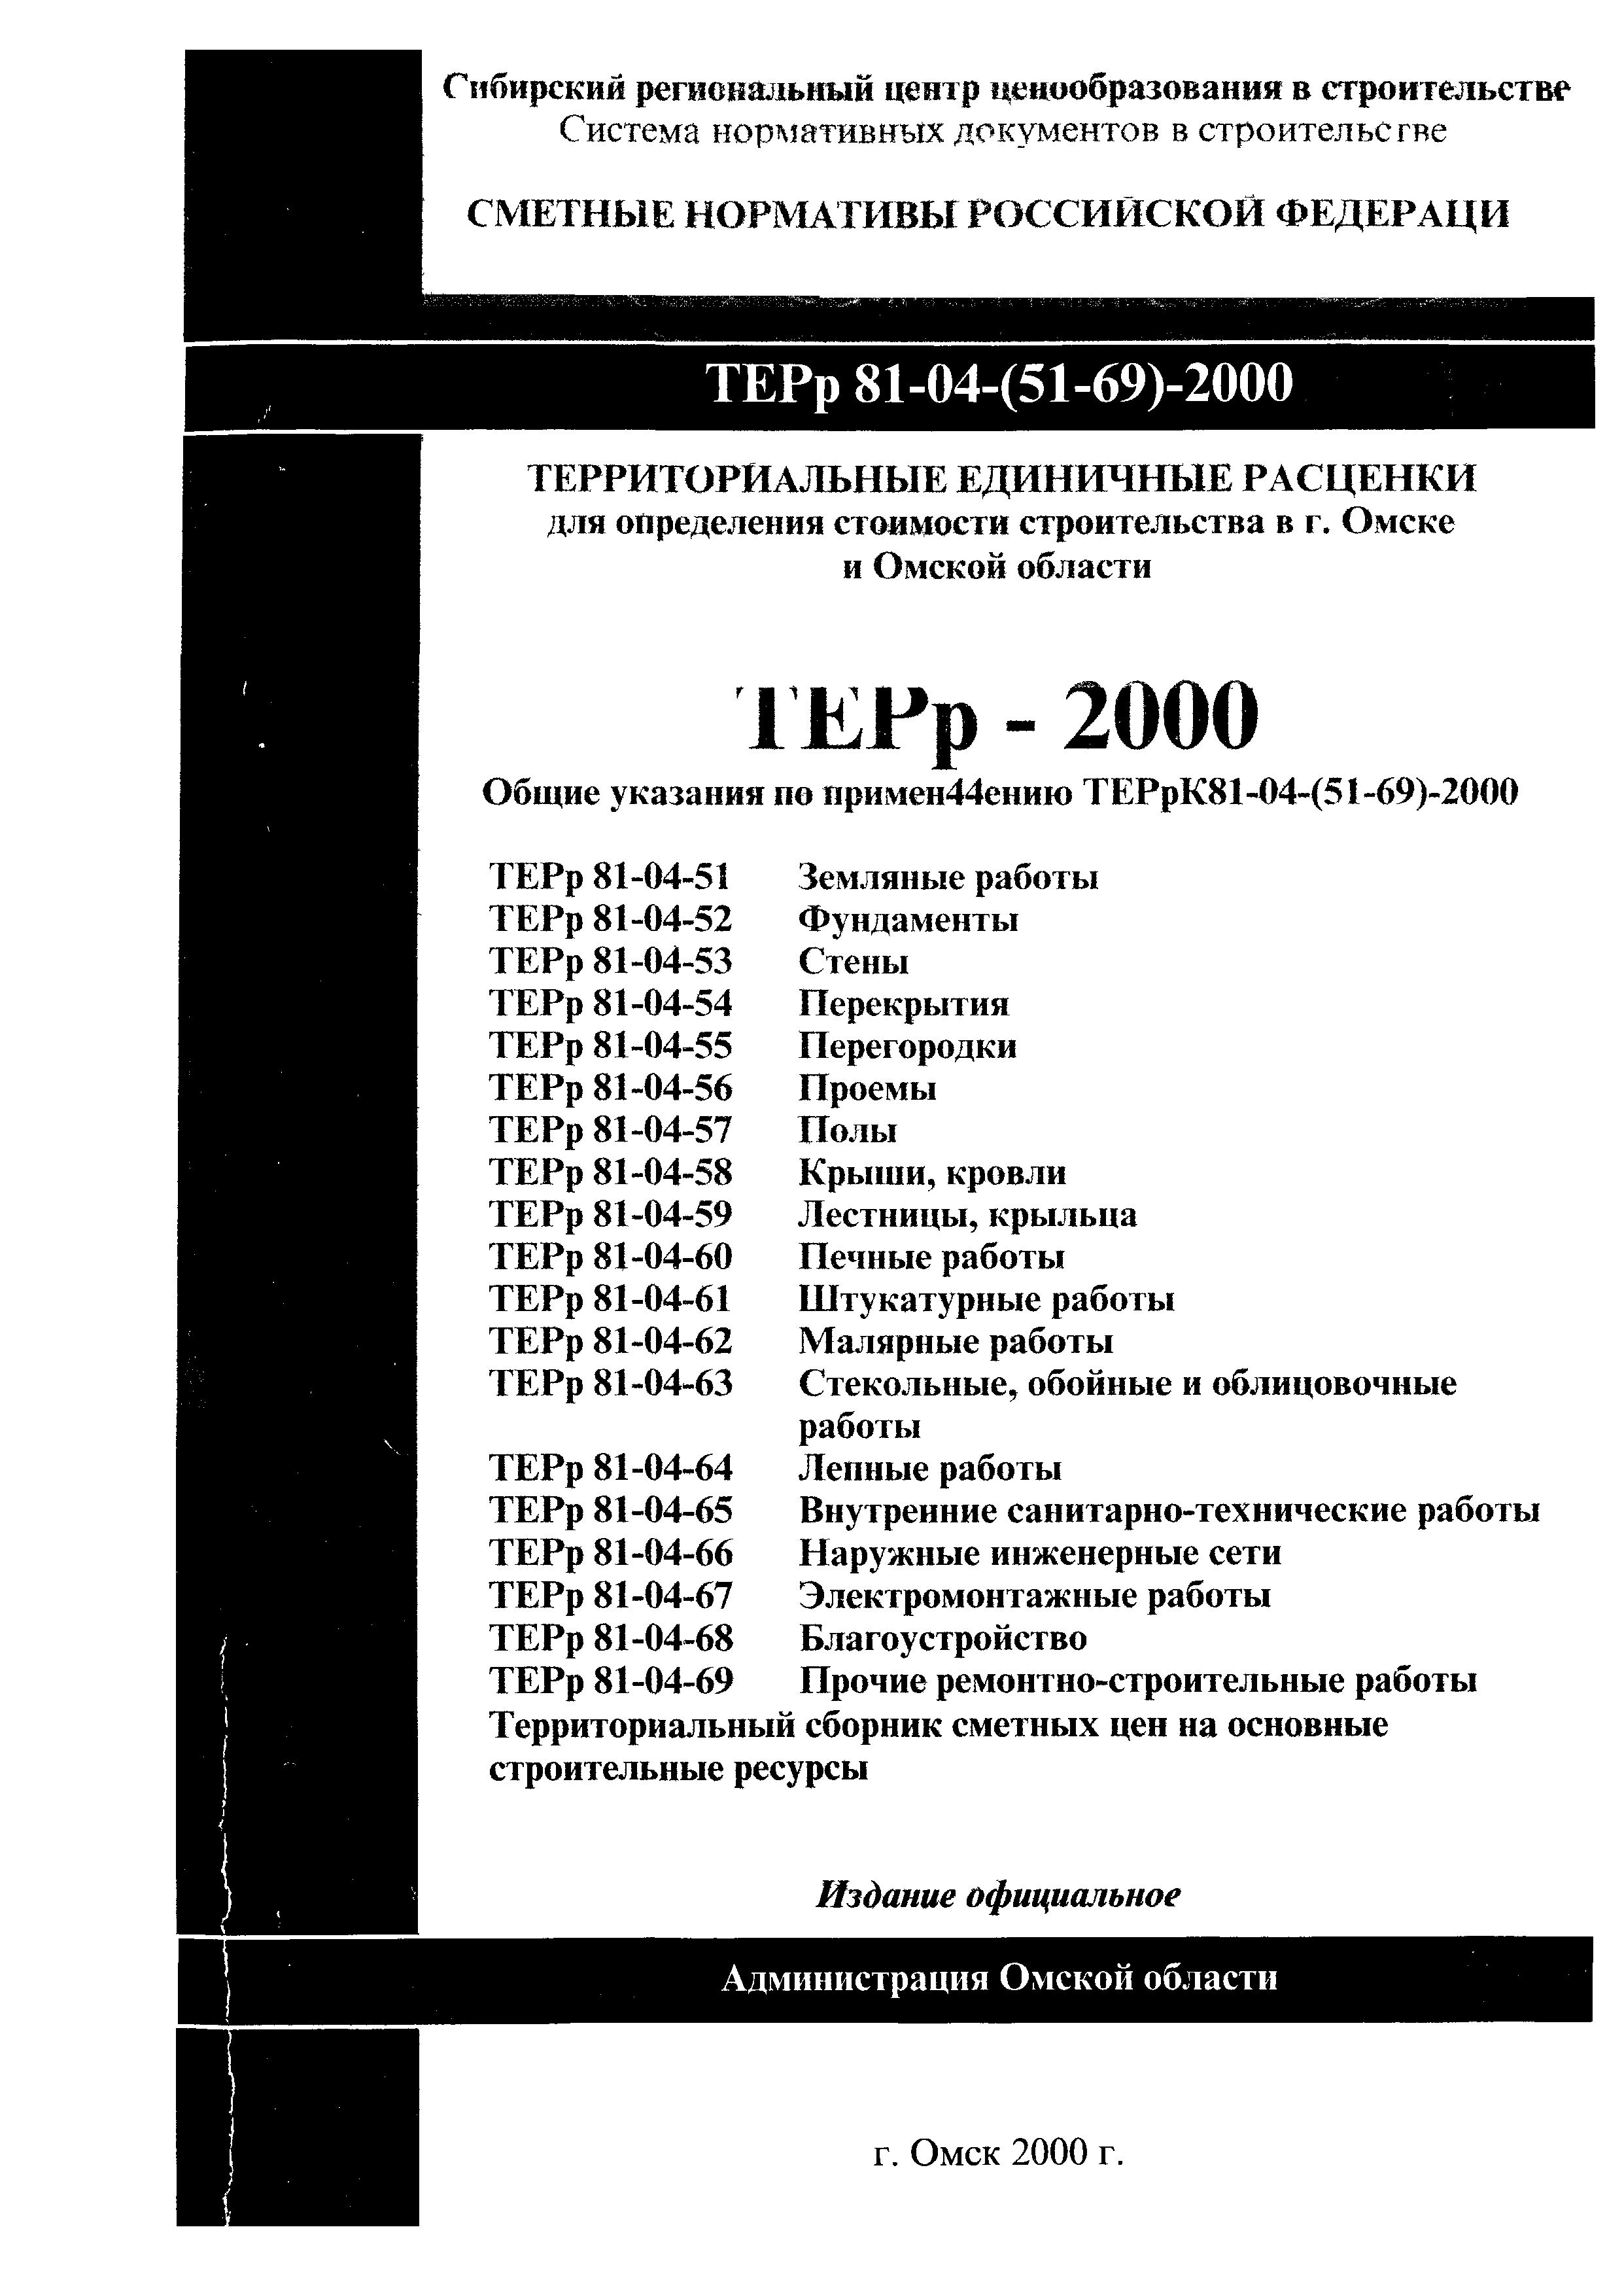 ТЕРр Омской области 2000-62